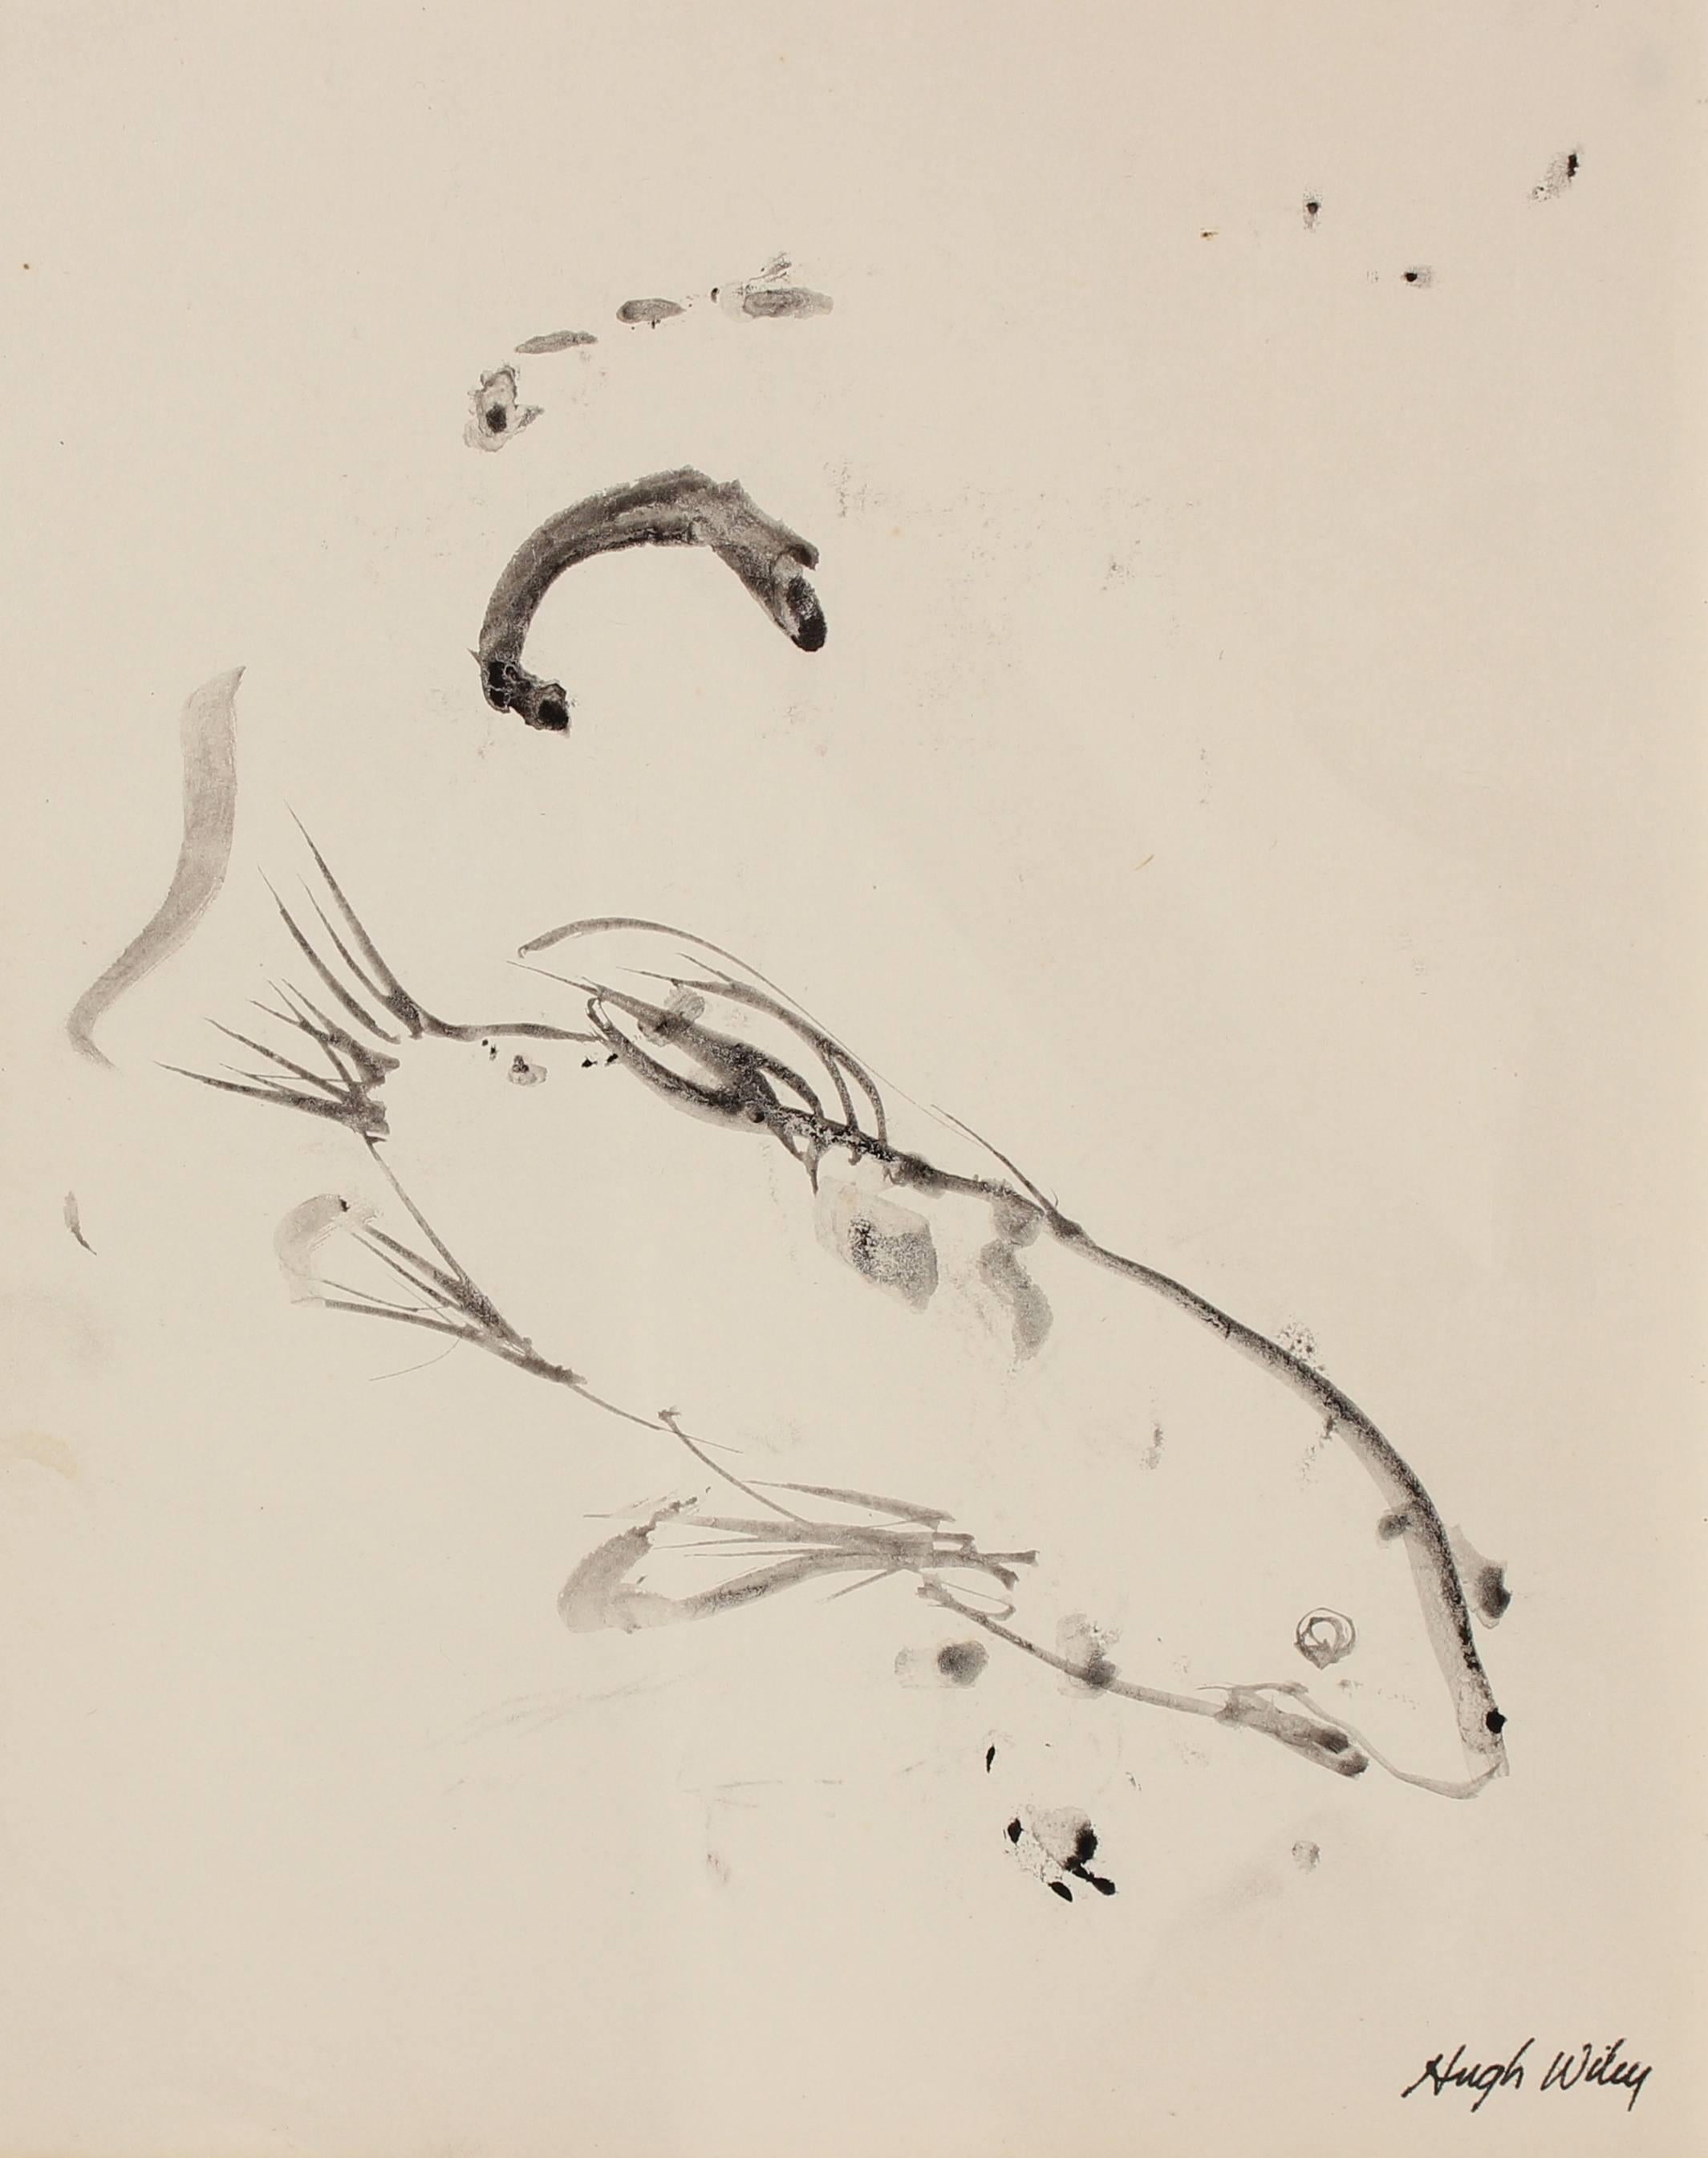 Hugh Wiley Animal Art - Monochromatic Ink Drawing of a Fish, 1960